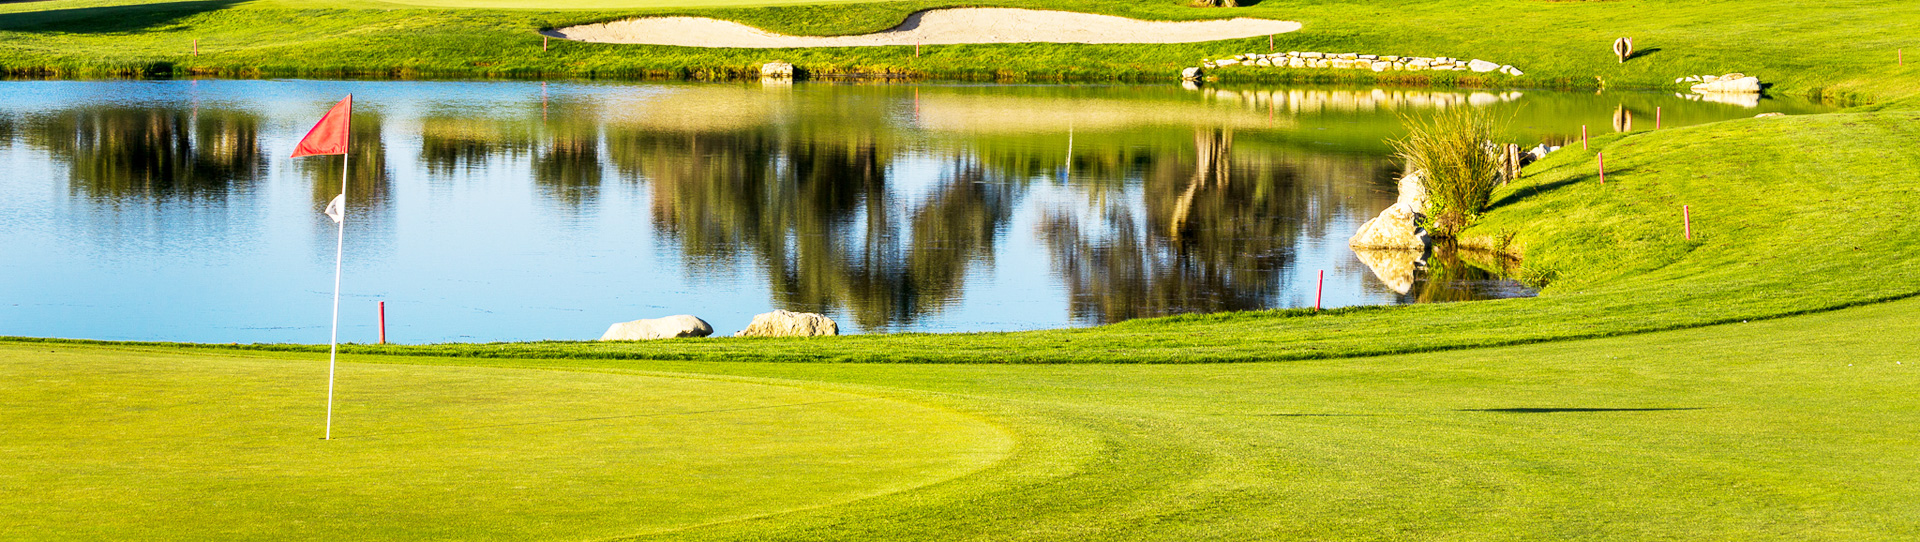 Portugal golf courses - Quinta de Cima Golf Course - Photo 3